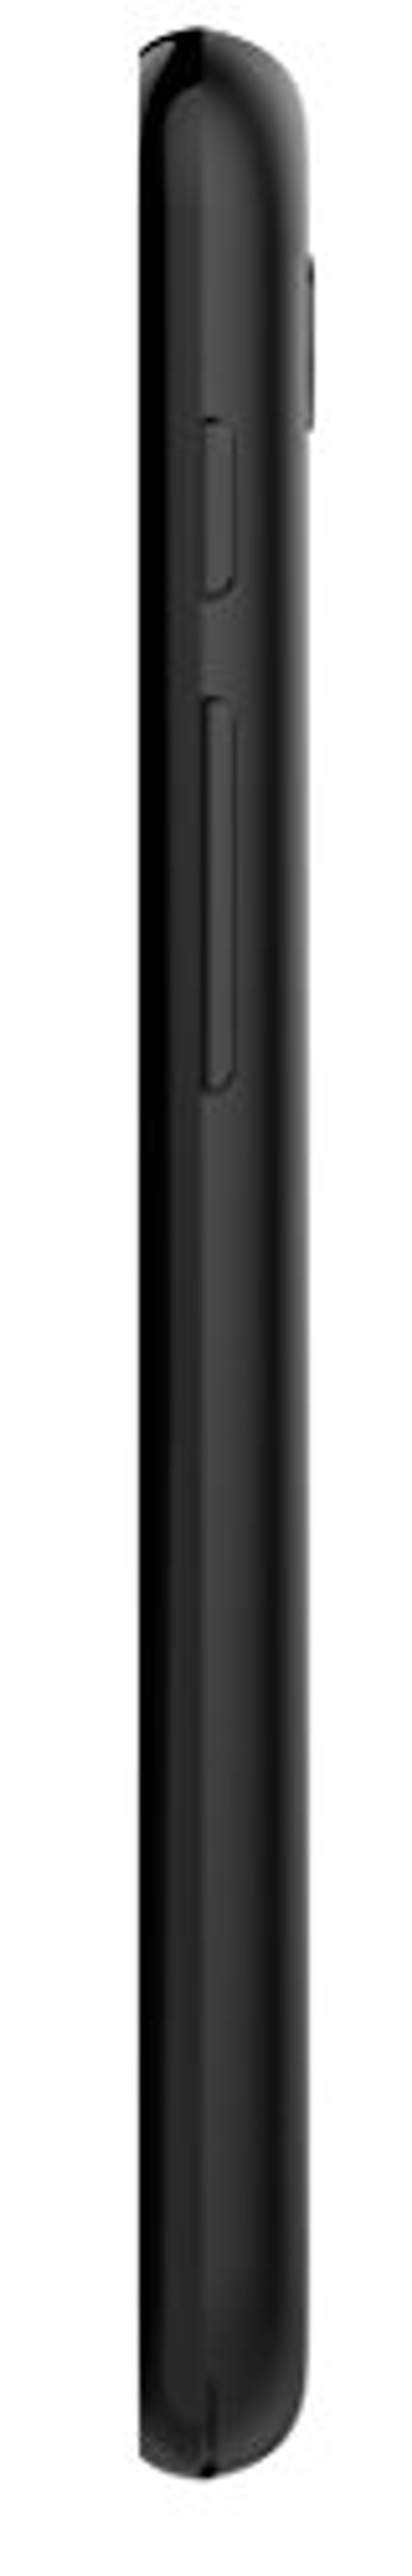 ALCATEL PIXI 4-5 BLACK 5010D Schwarz GB Dual SIM 8 (3G)